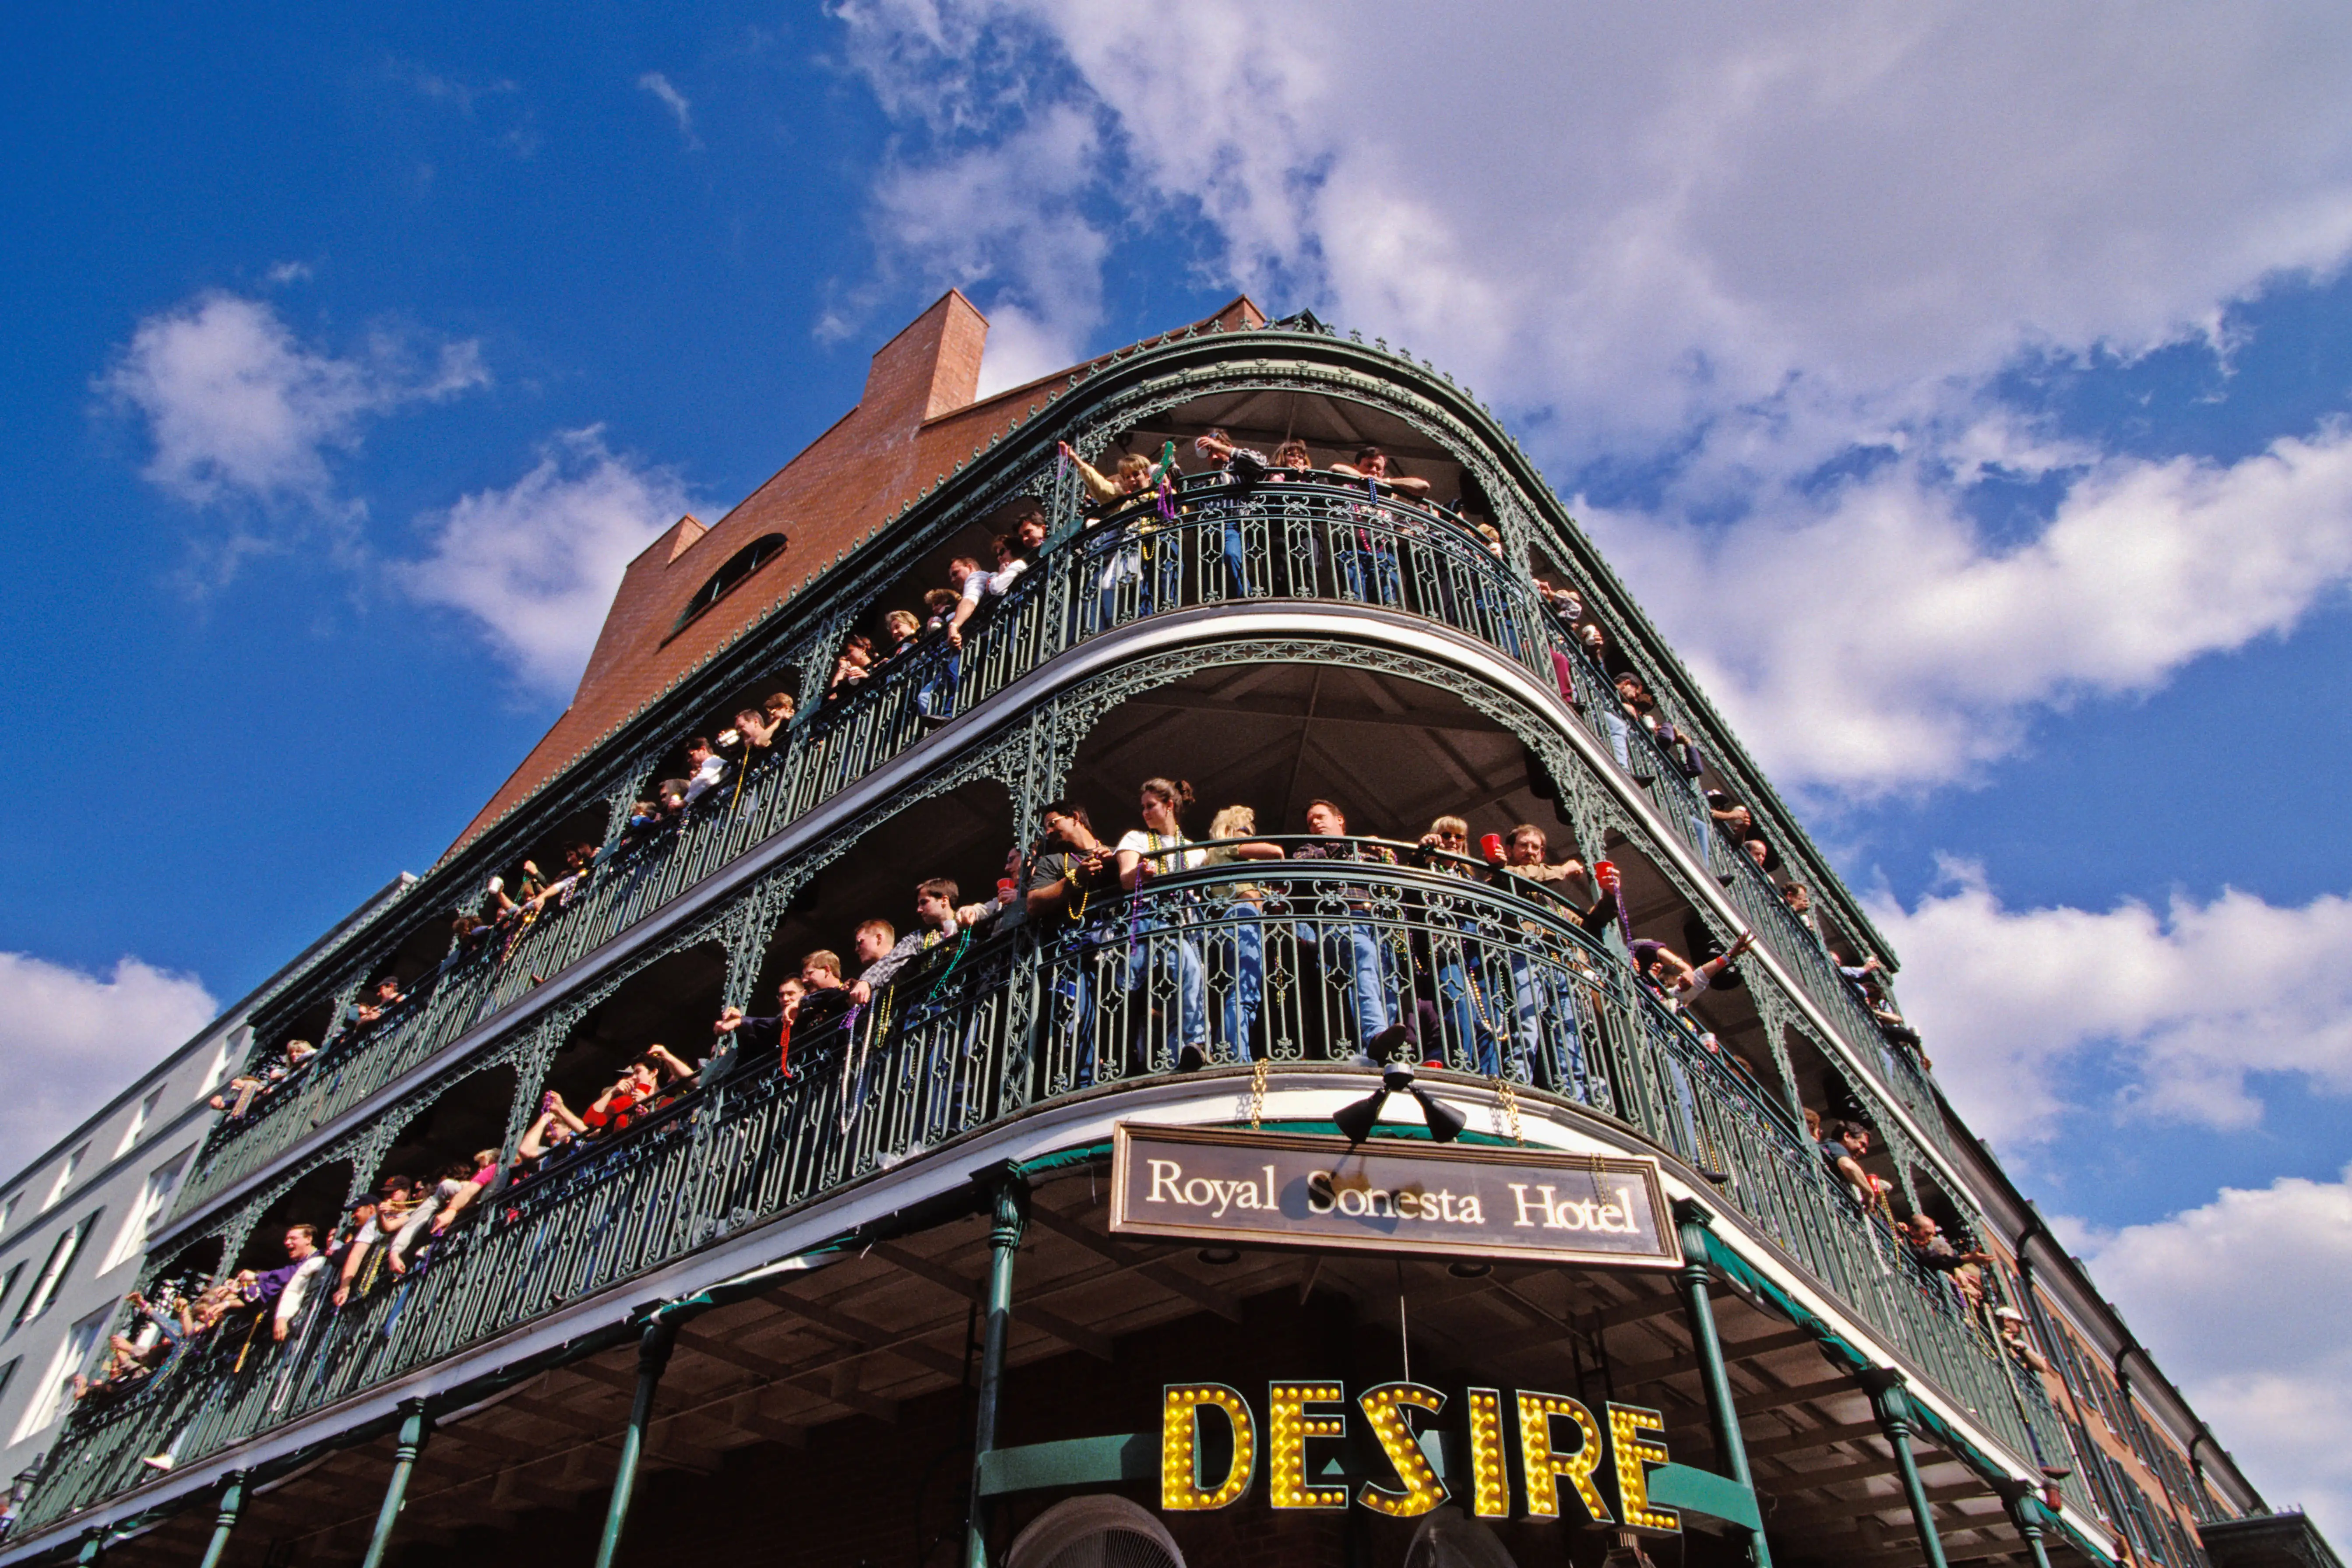 New Orleans Louisiana Mardi Gras Crowds Line Balconies Of Royal Sonesta Hotel In French Quarter